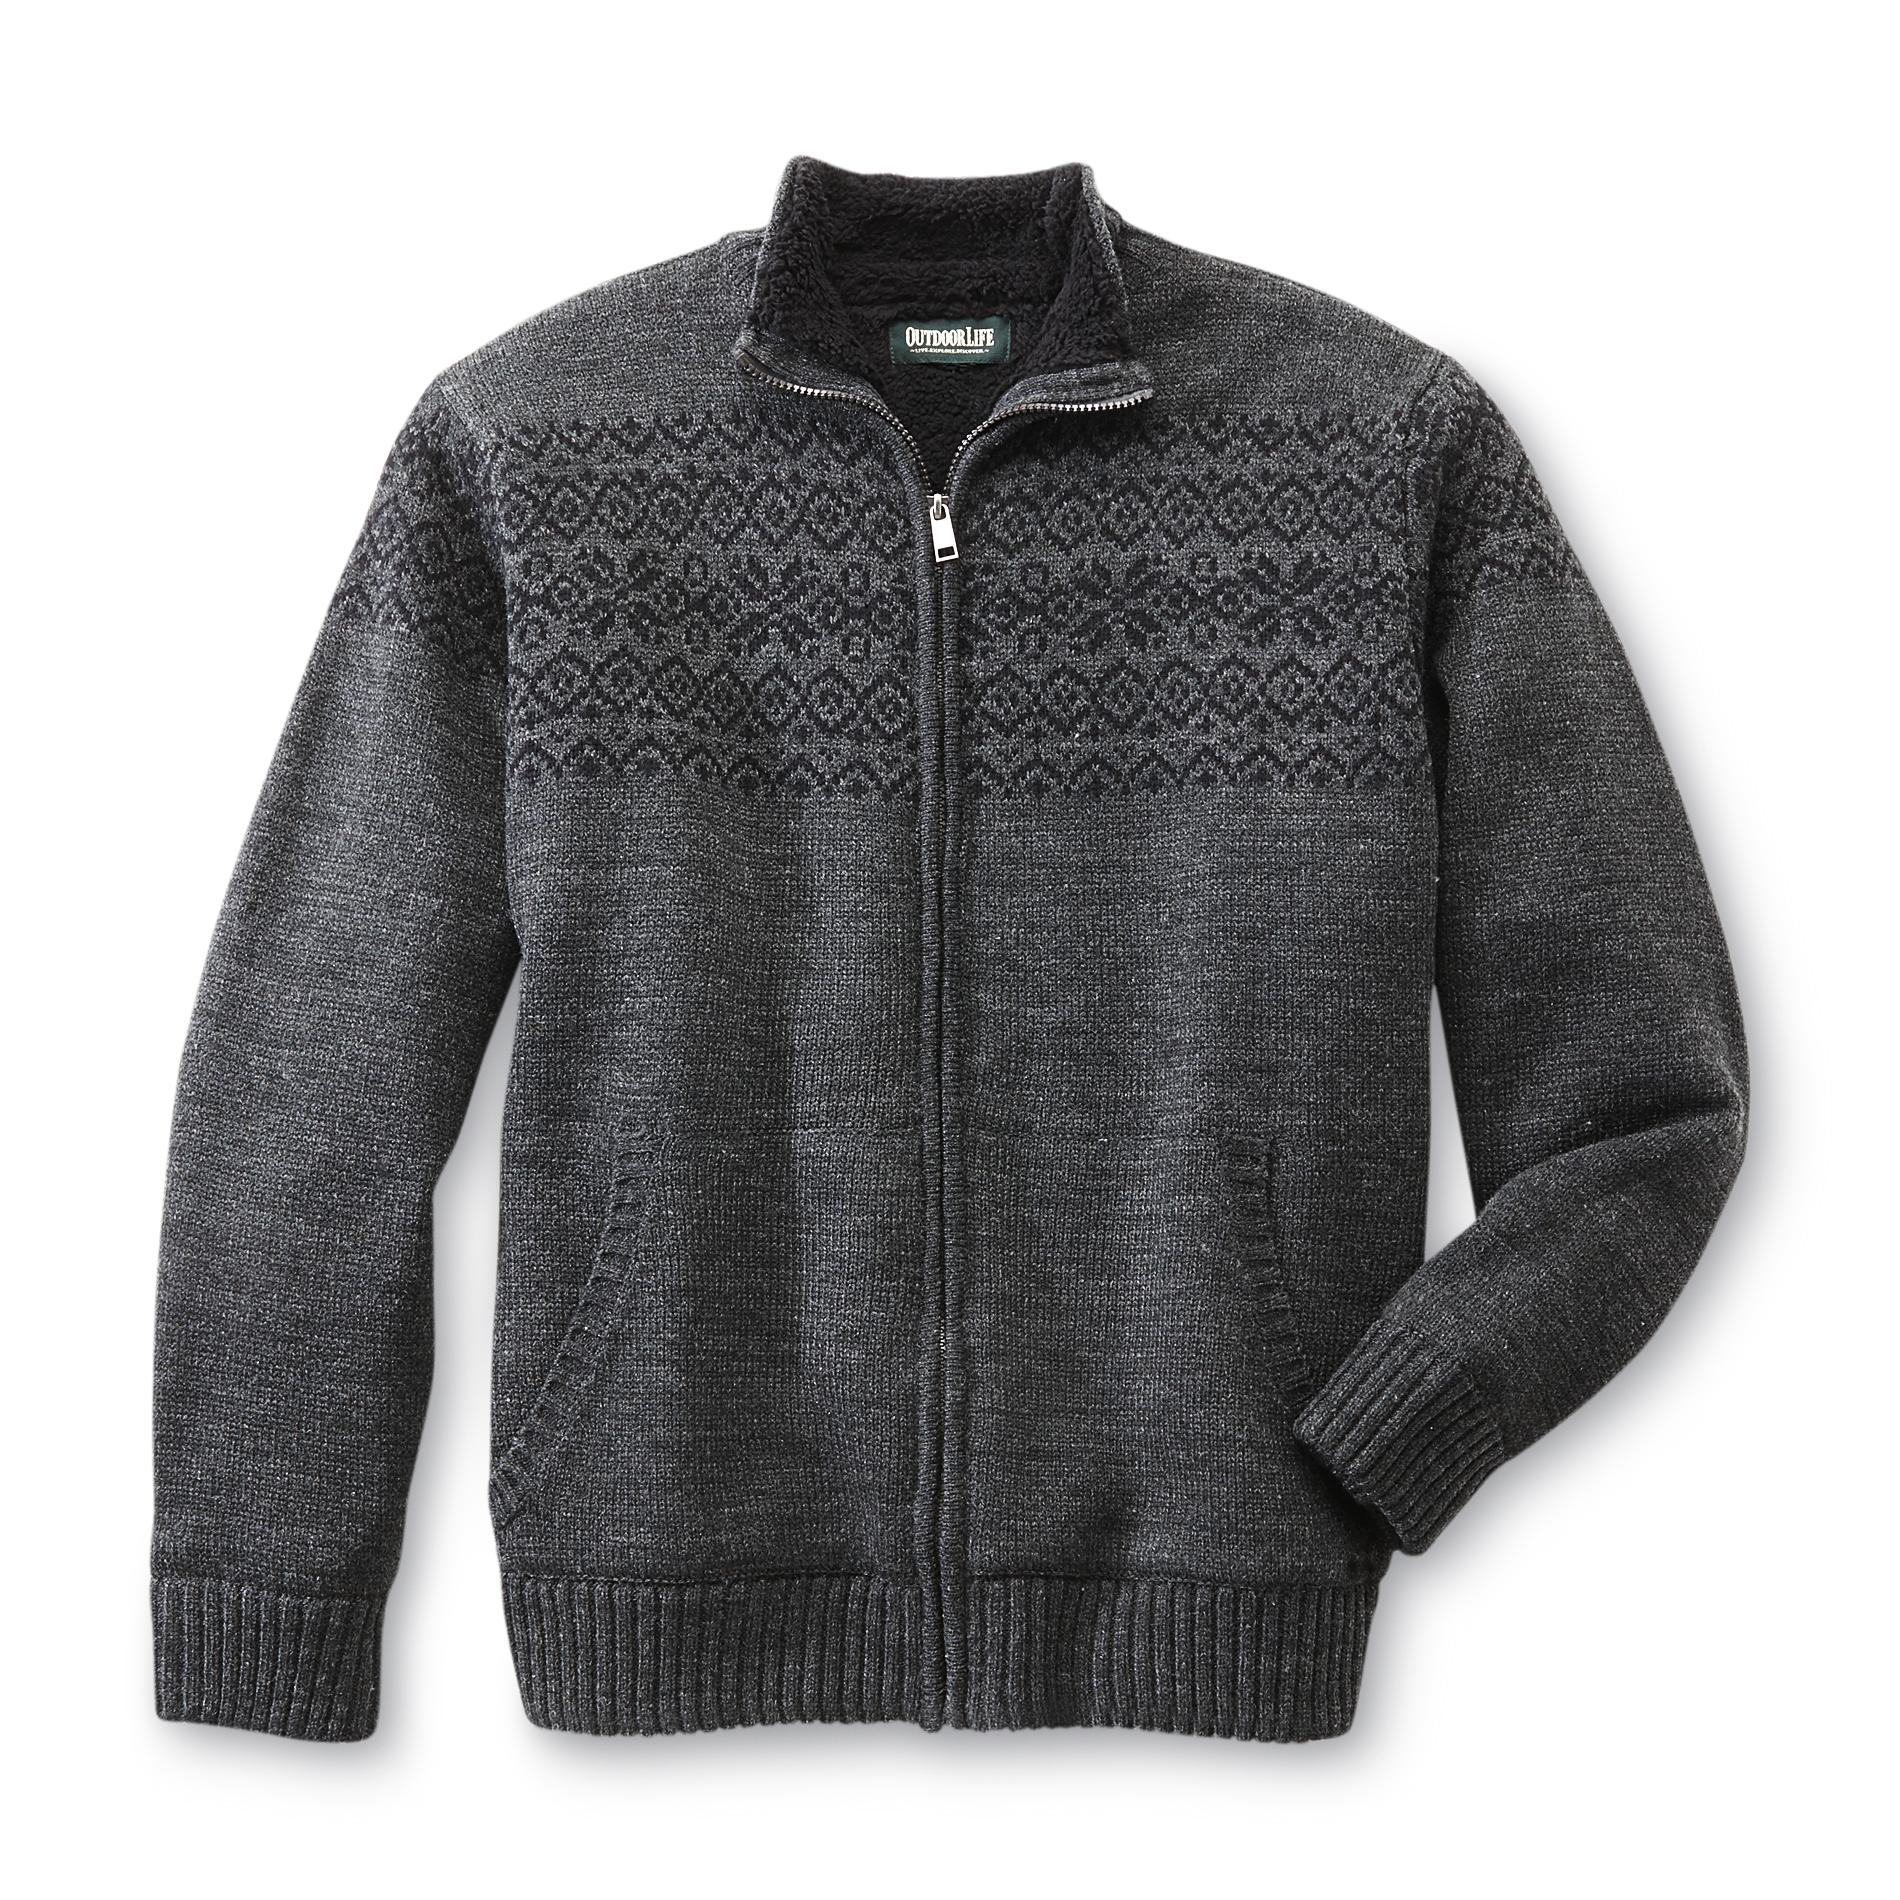 Outdoor Life Men's Fleece-Lined Sweater Jacket - Fair Isle